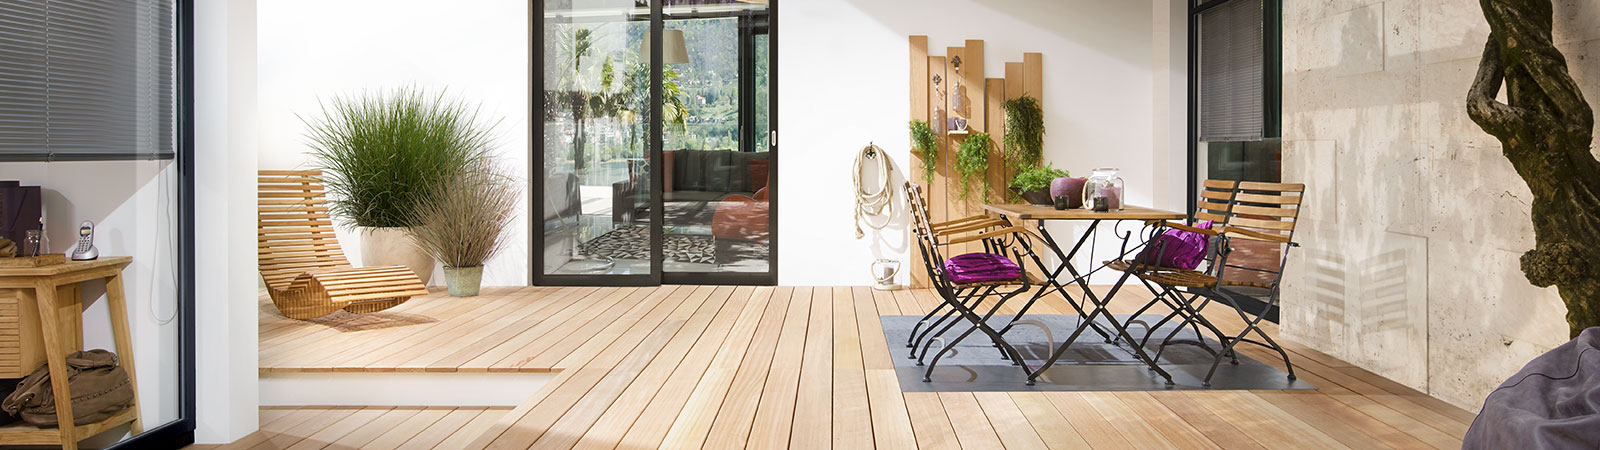 Modern garden deck design with Osmo deck boards made of smooth Bangkirai wood